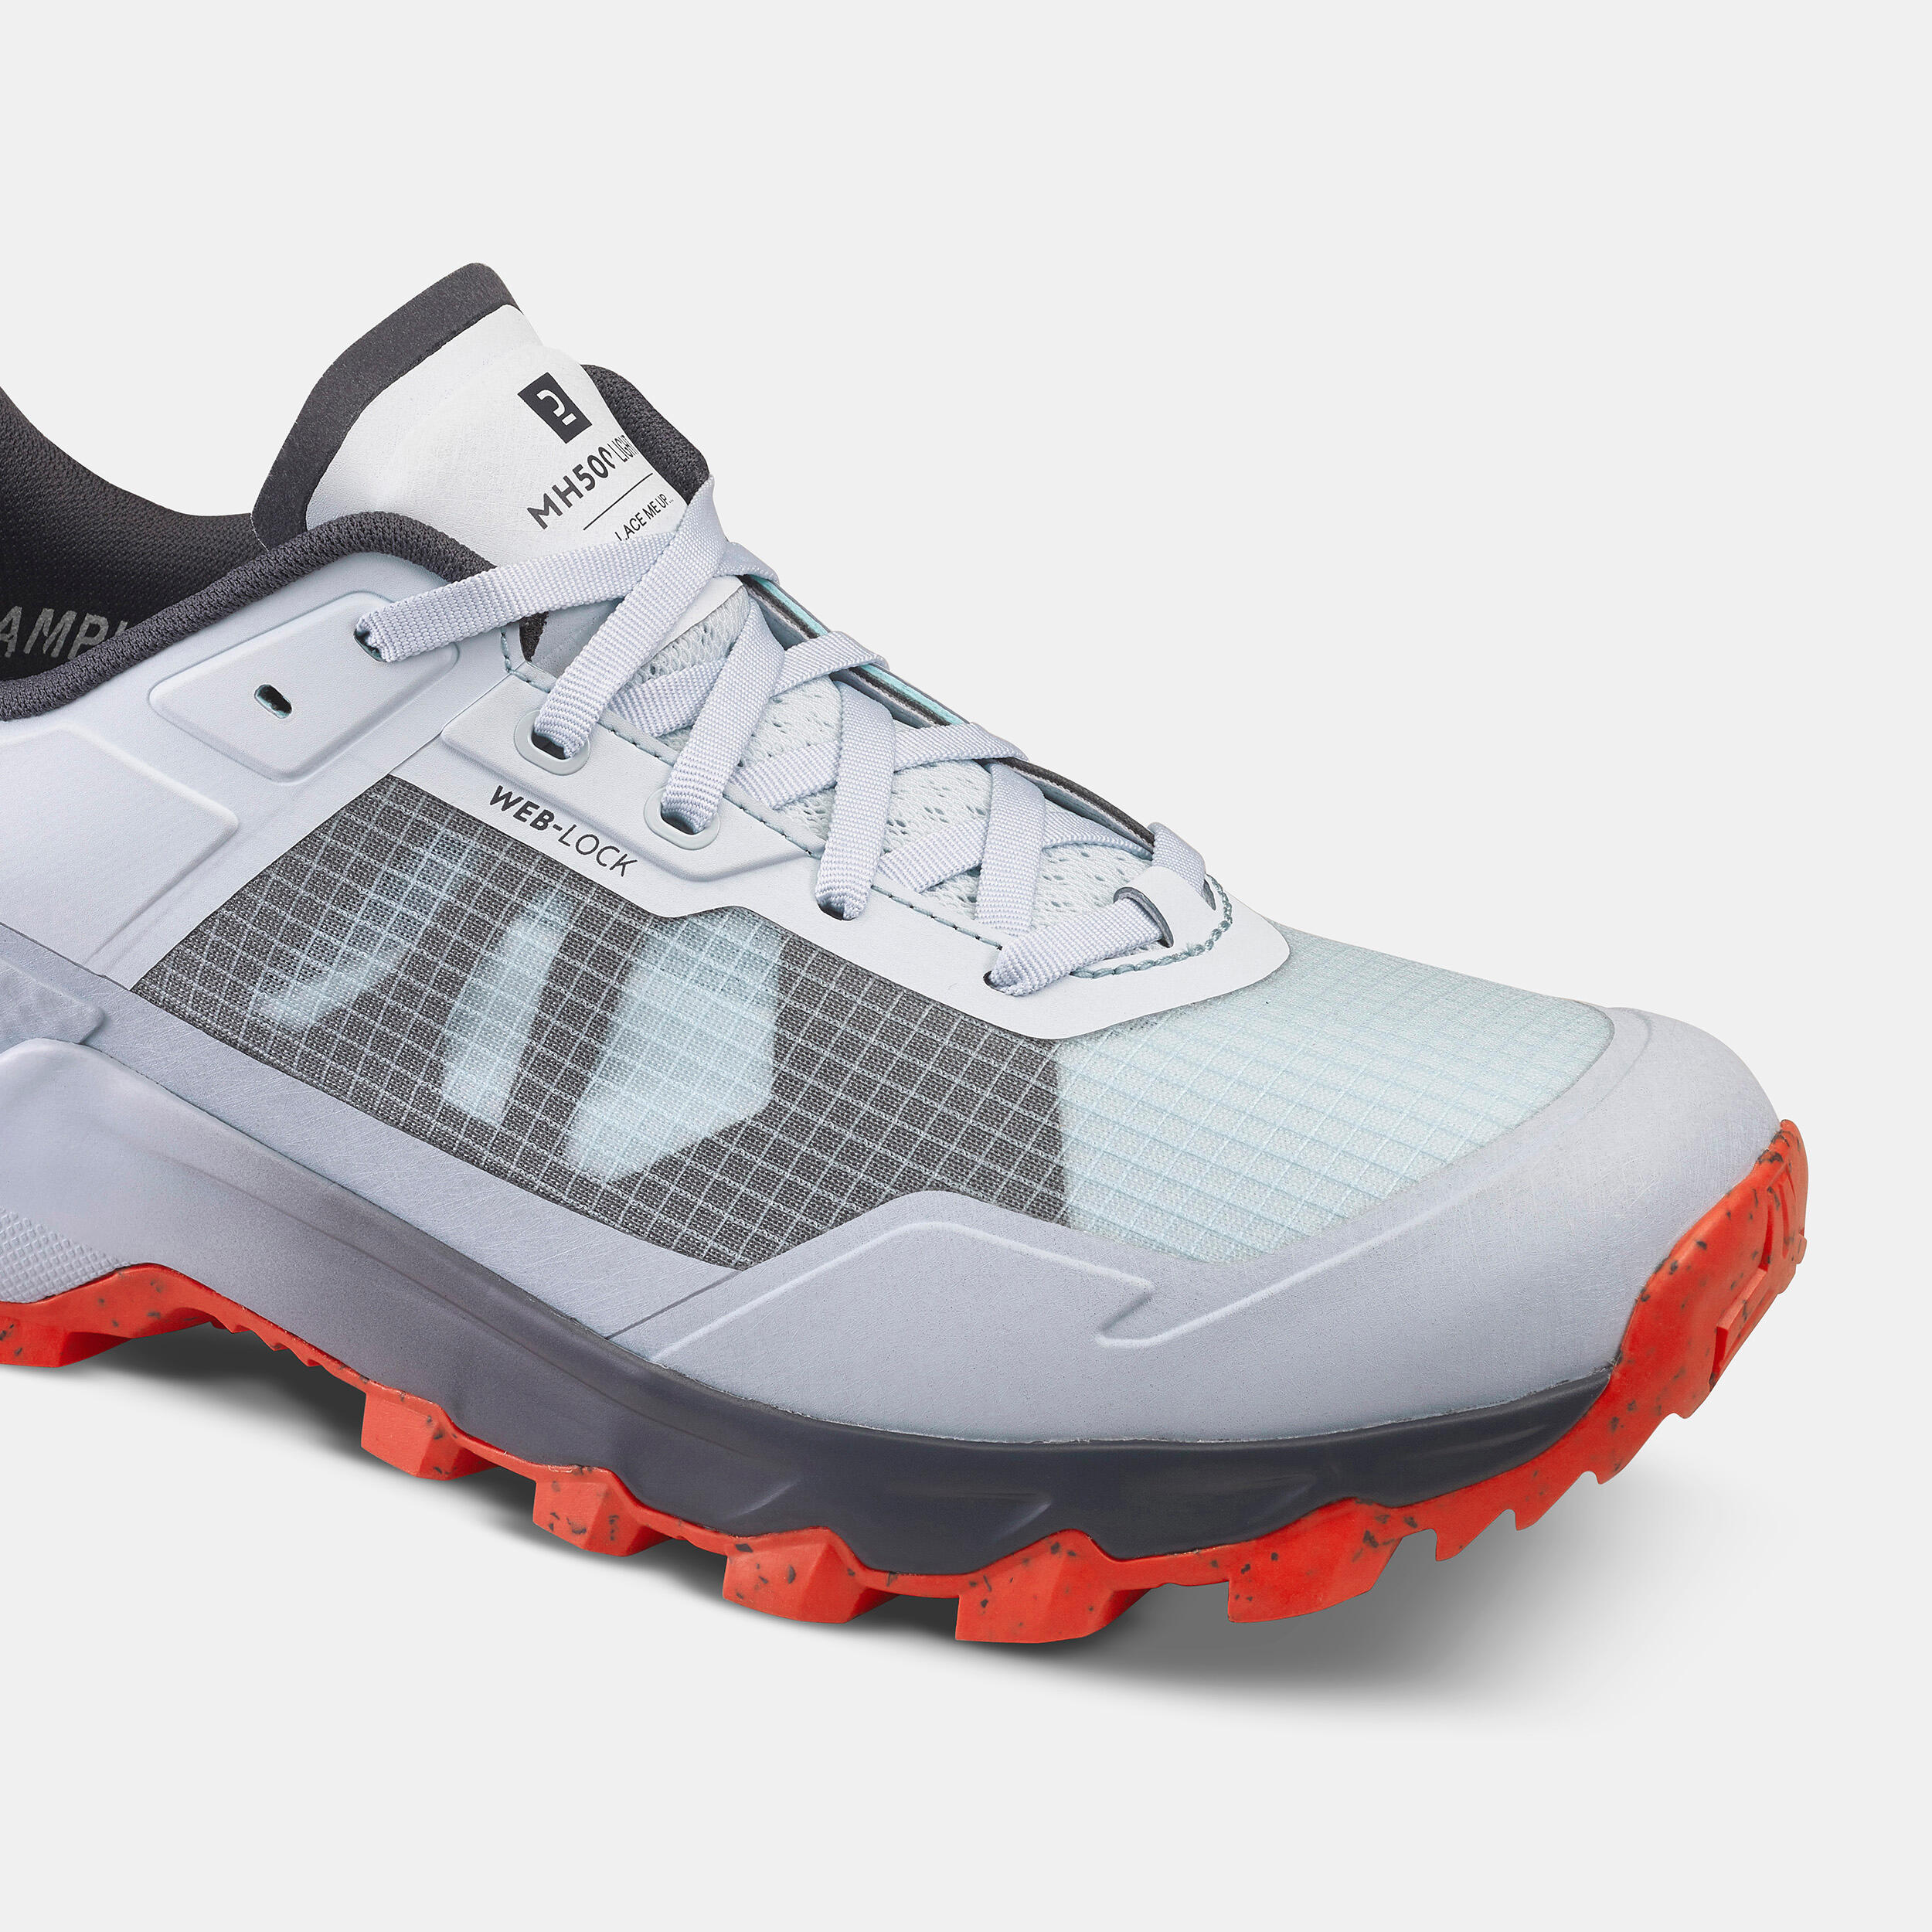 Men’s mountain Hiking Shoes - MH500 LIGHT - Light Grey 4/8